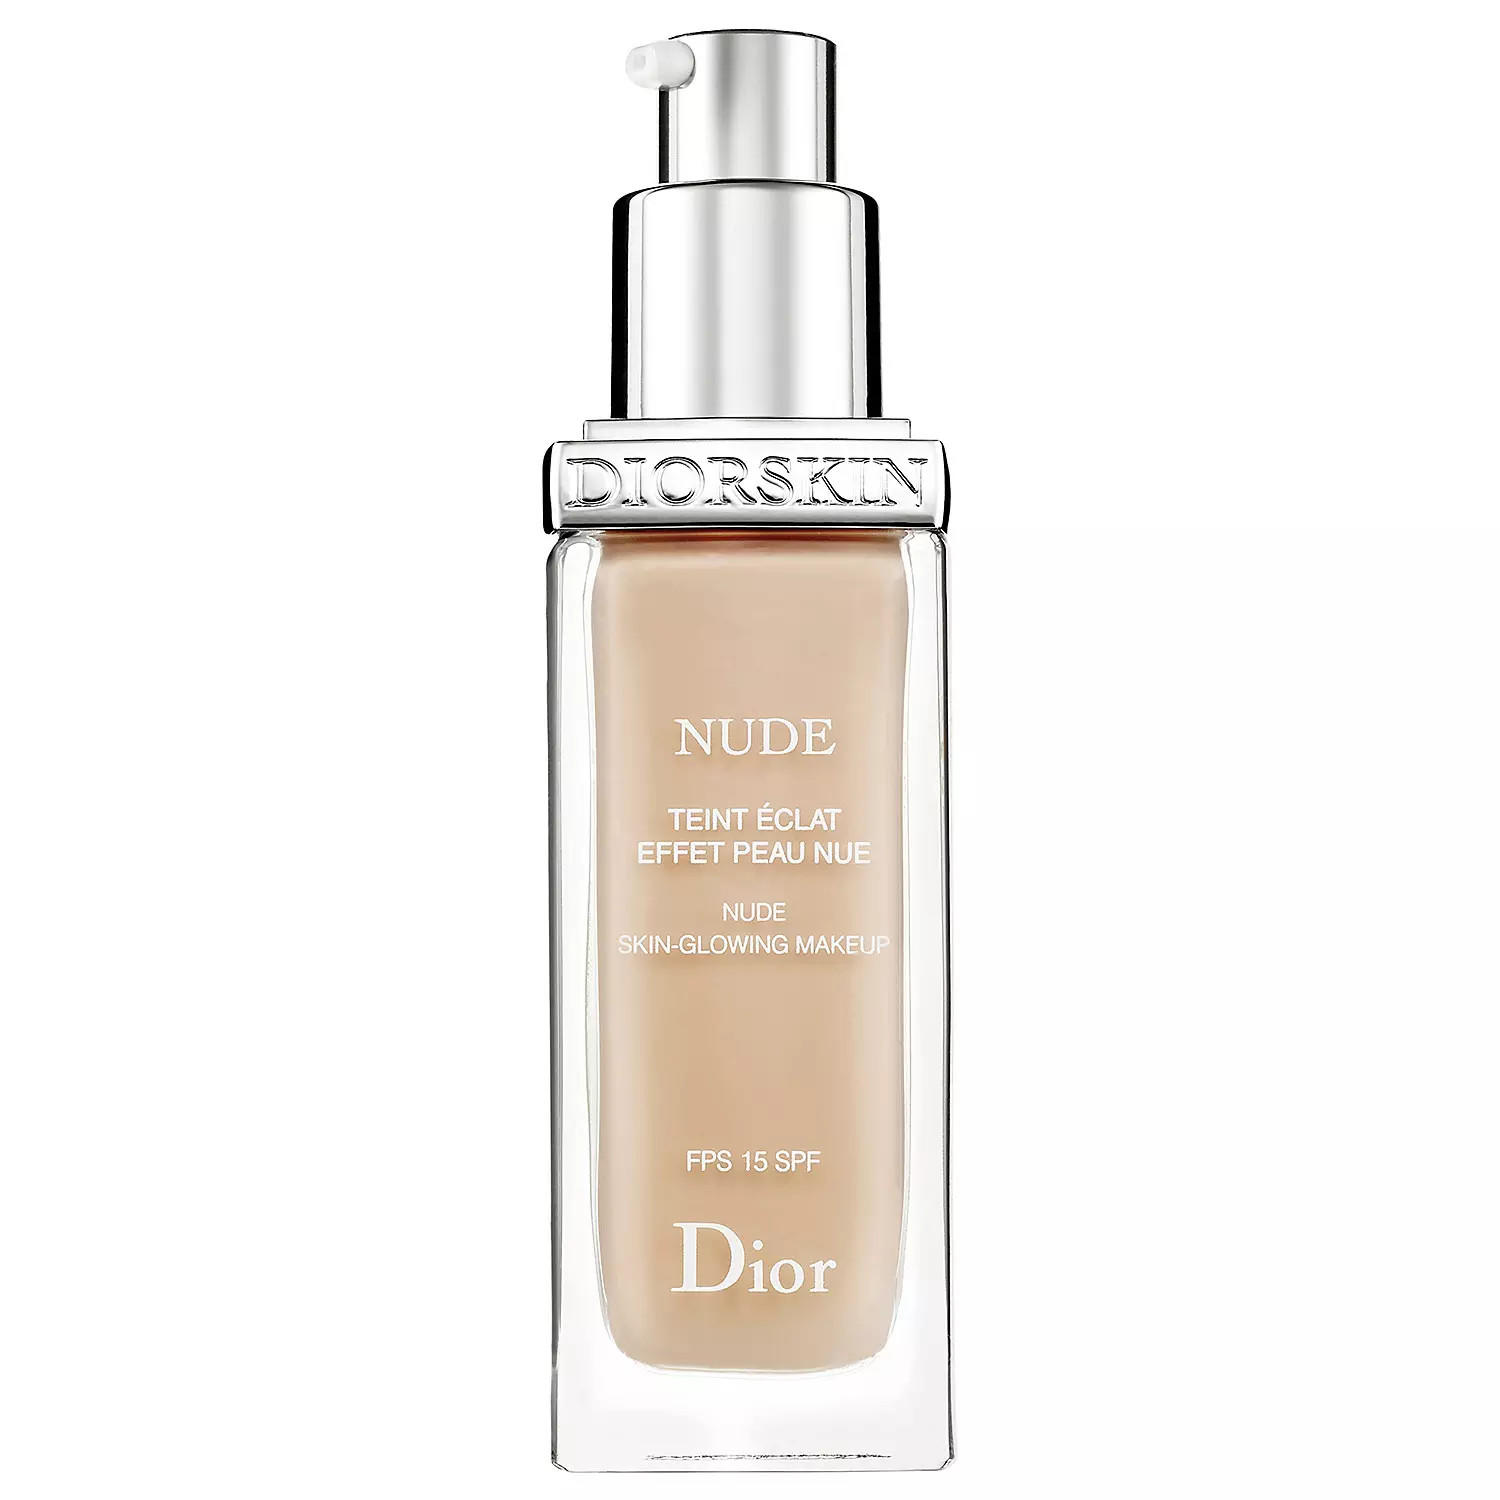 Dior DiorSkin Nude Skin-Glowing Makeup 021